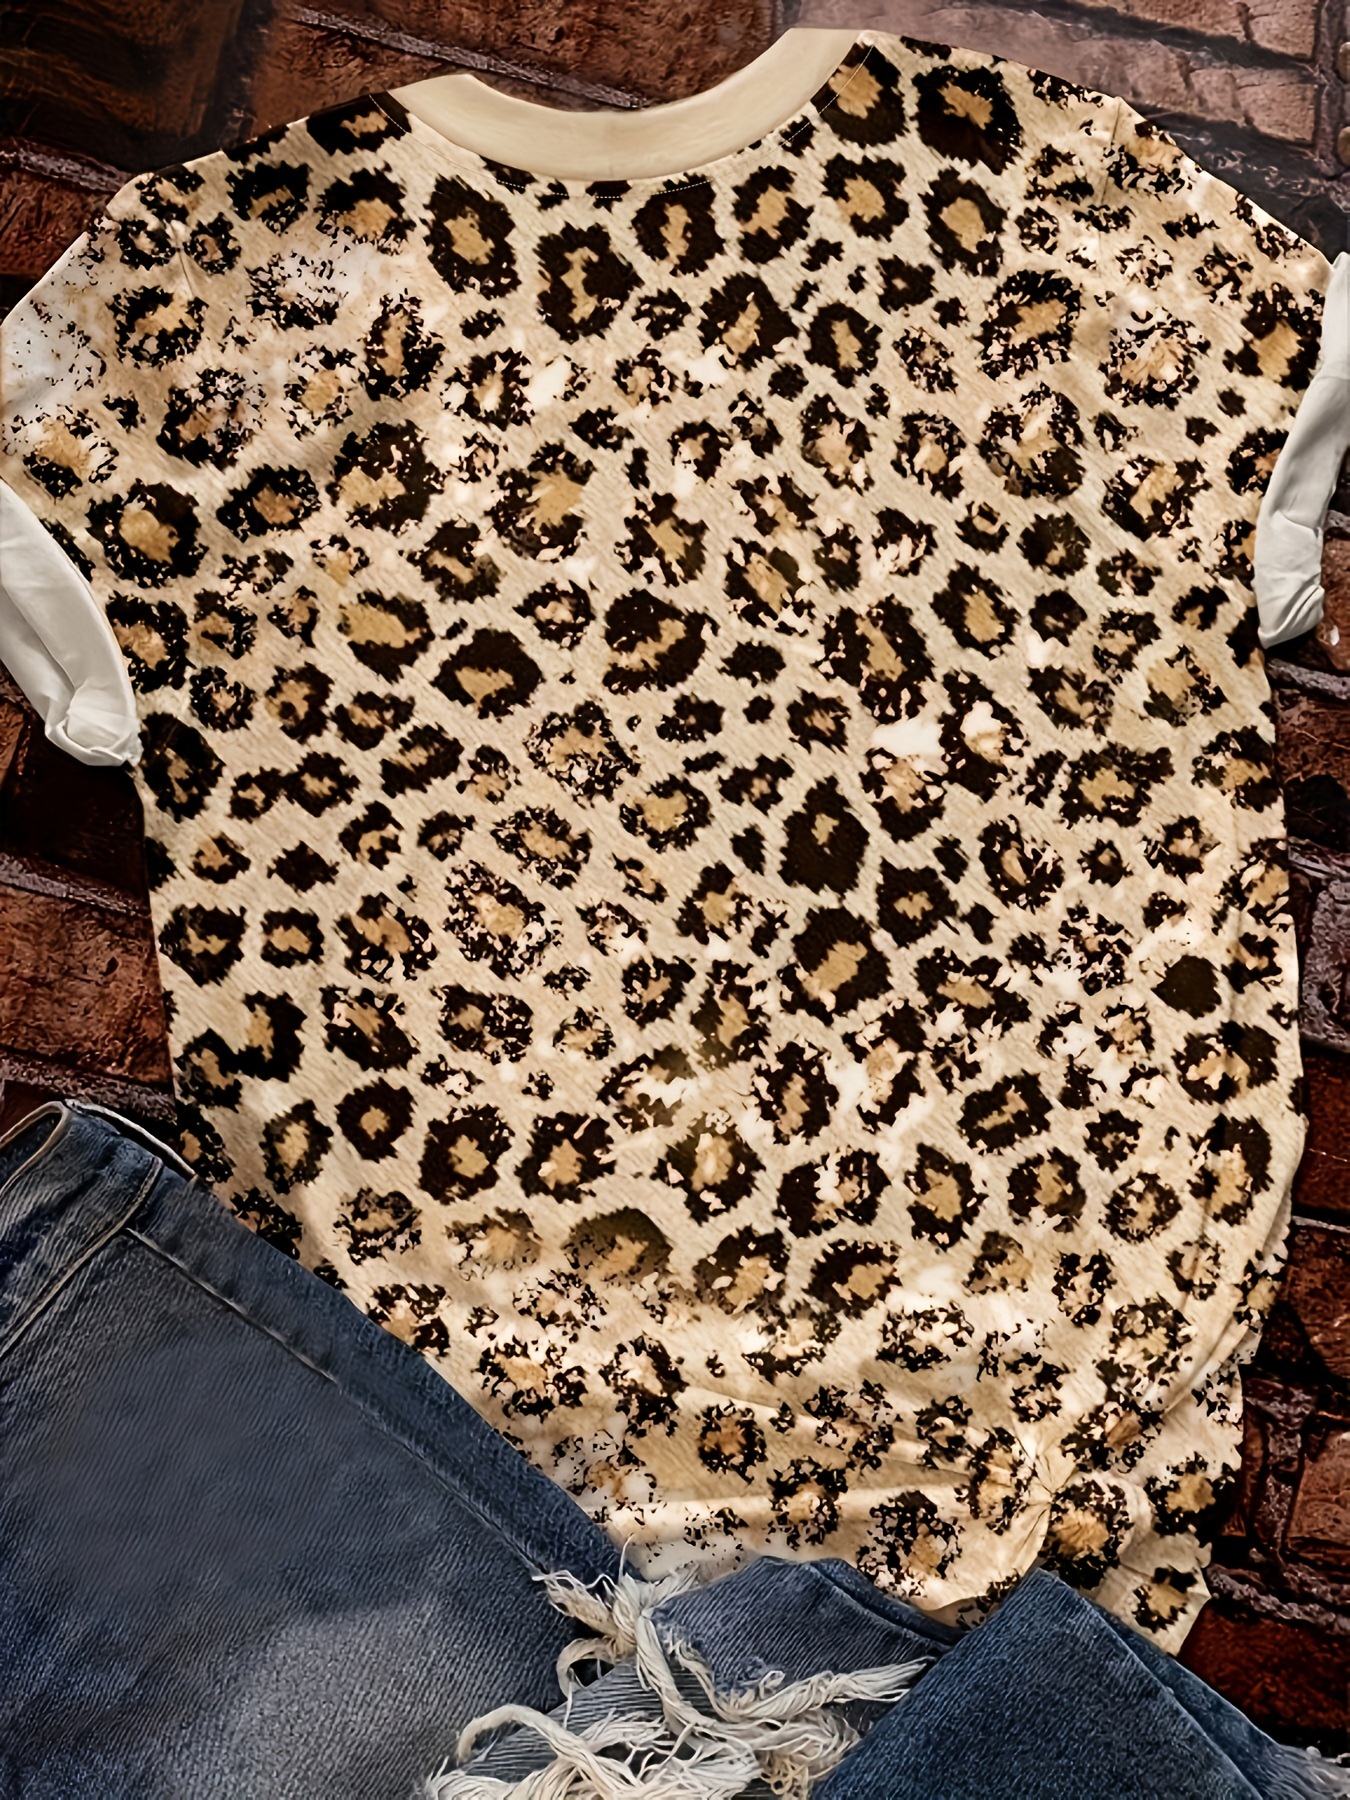 Amur Leopard - Hemp / Cotton T-Shirt - Unisex - EarthCitizen